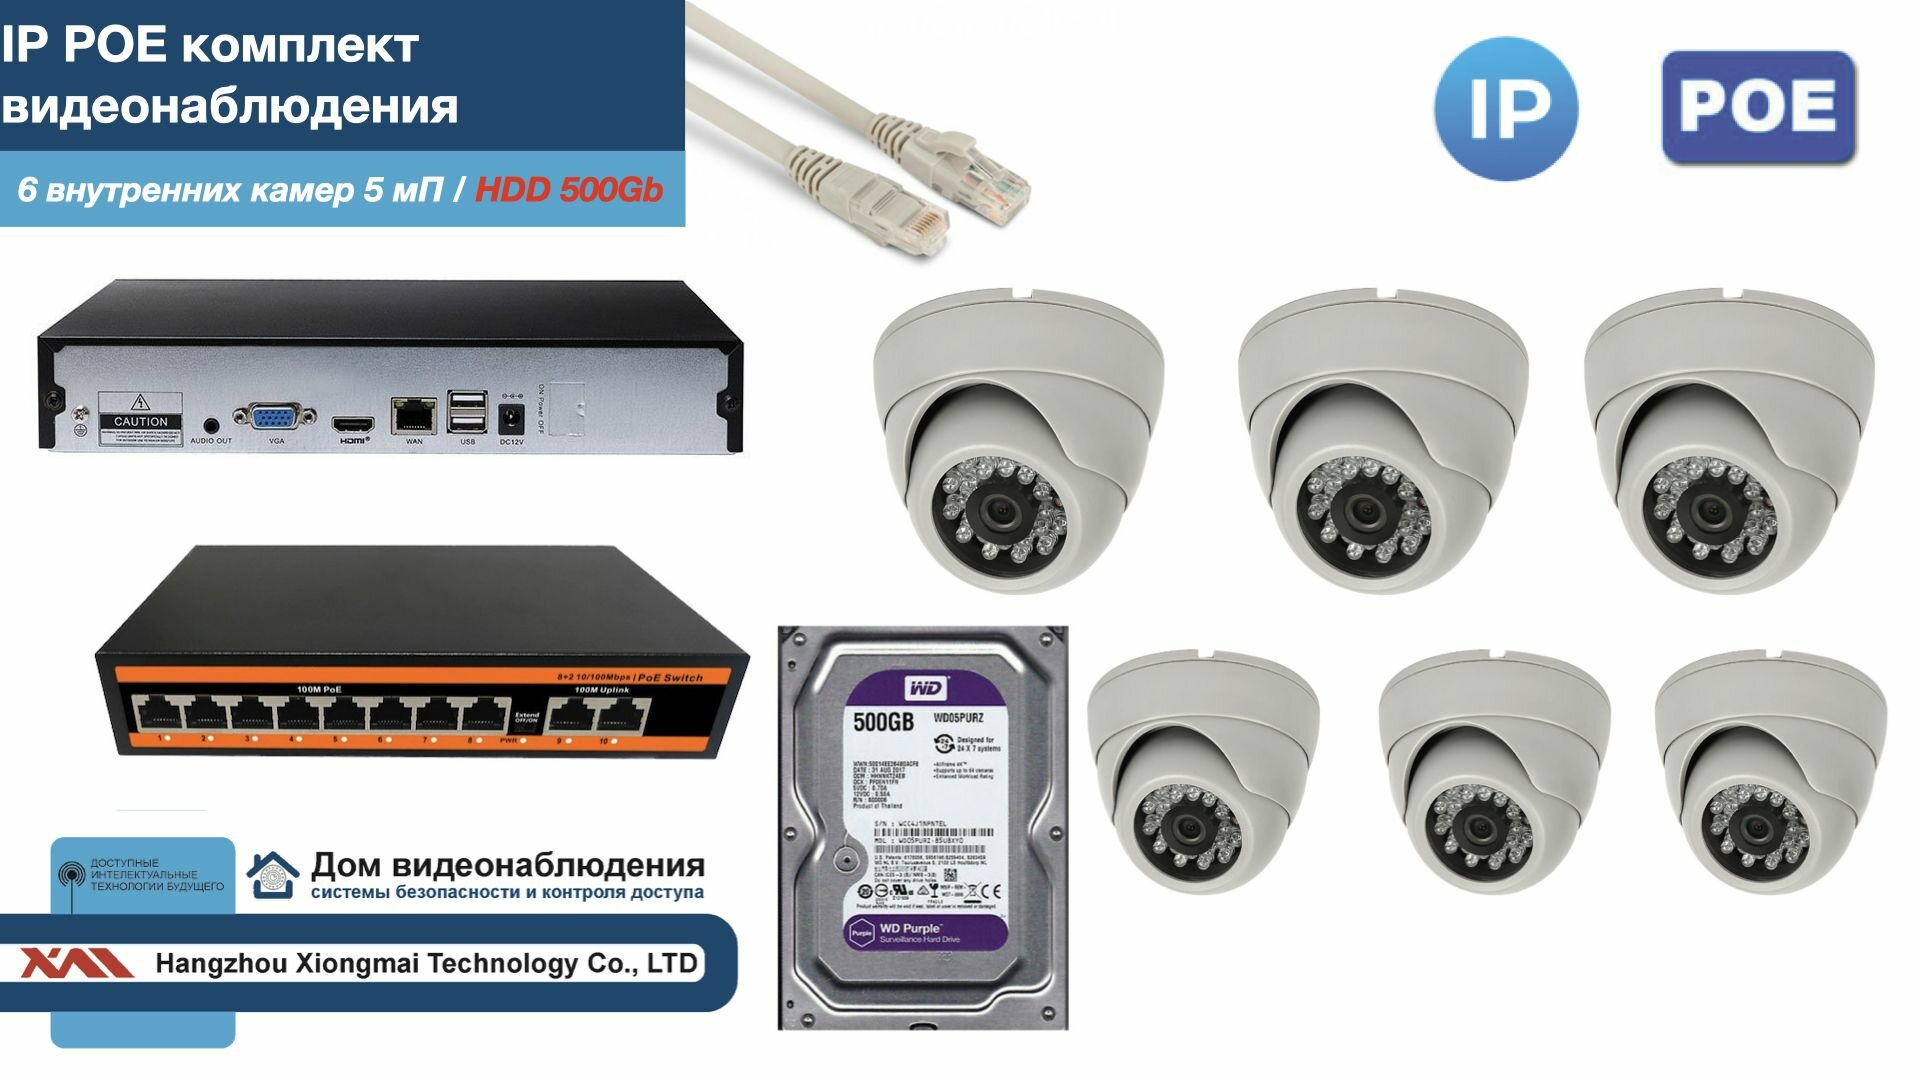 Полный IP POE комплект видеонаблюдения на 6 камер (KIT6IPPOE300W5MP-HDD500Gb)